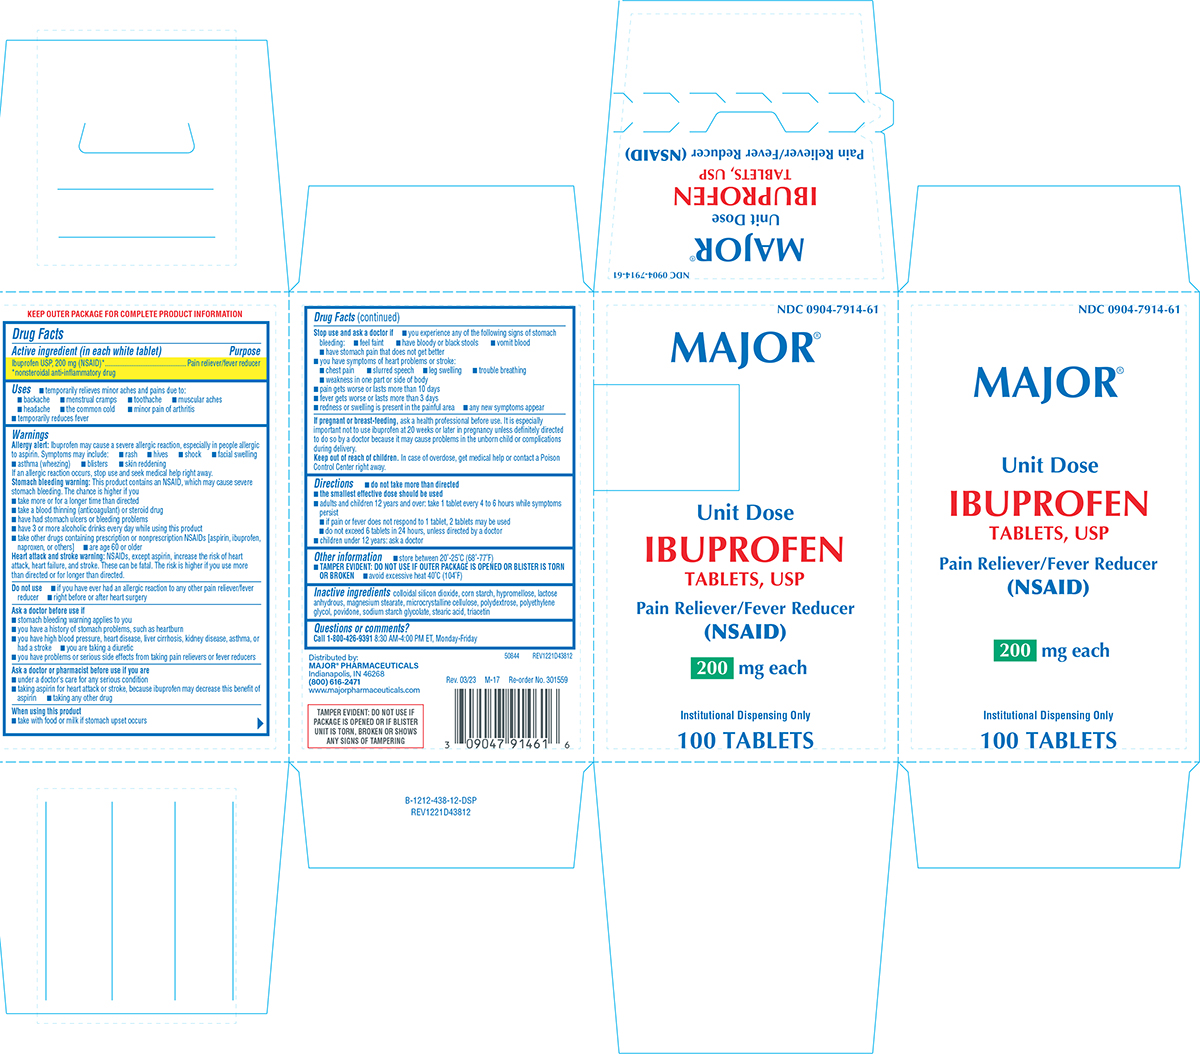 Ibuprofen 200 mg Tab 100 Unit Dose by Major Pharma USA